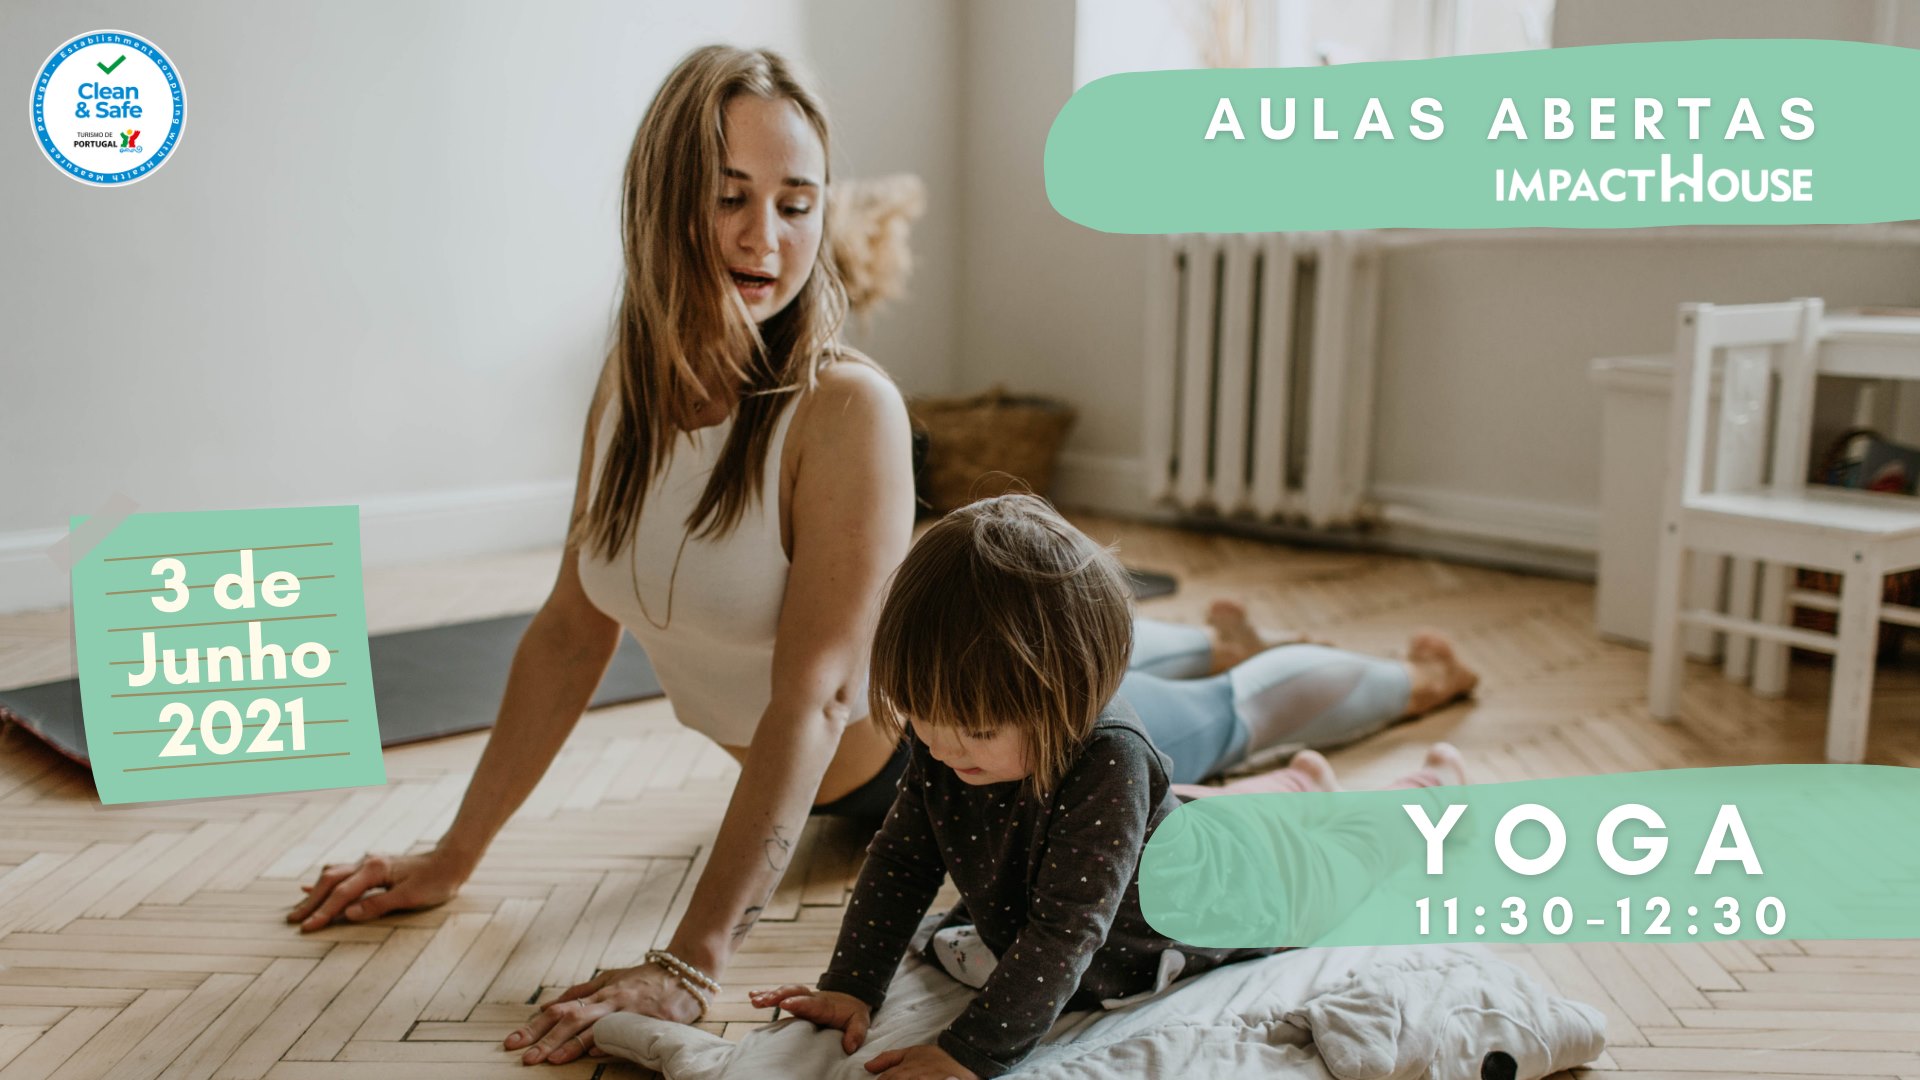 Aula Aberta - Yoga para famílias